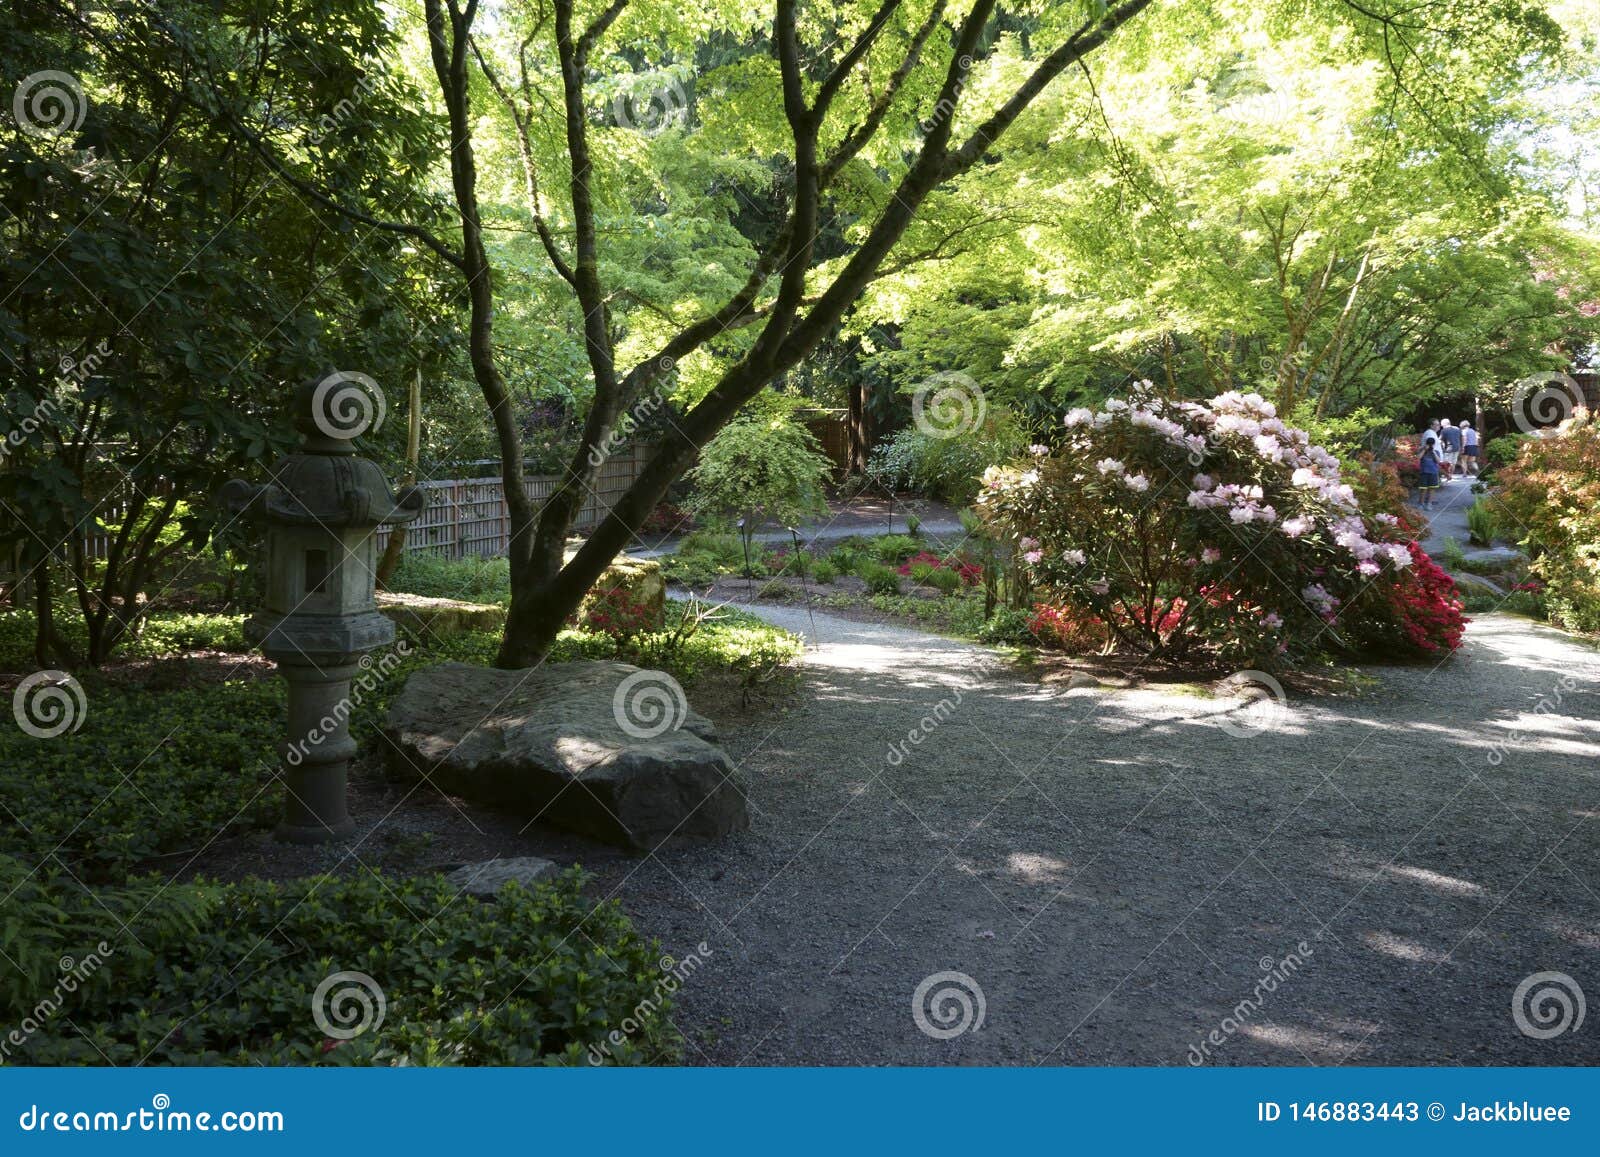 Japanese Garden In Bellevue Botanical Garden Stock Image Image